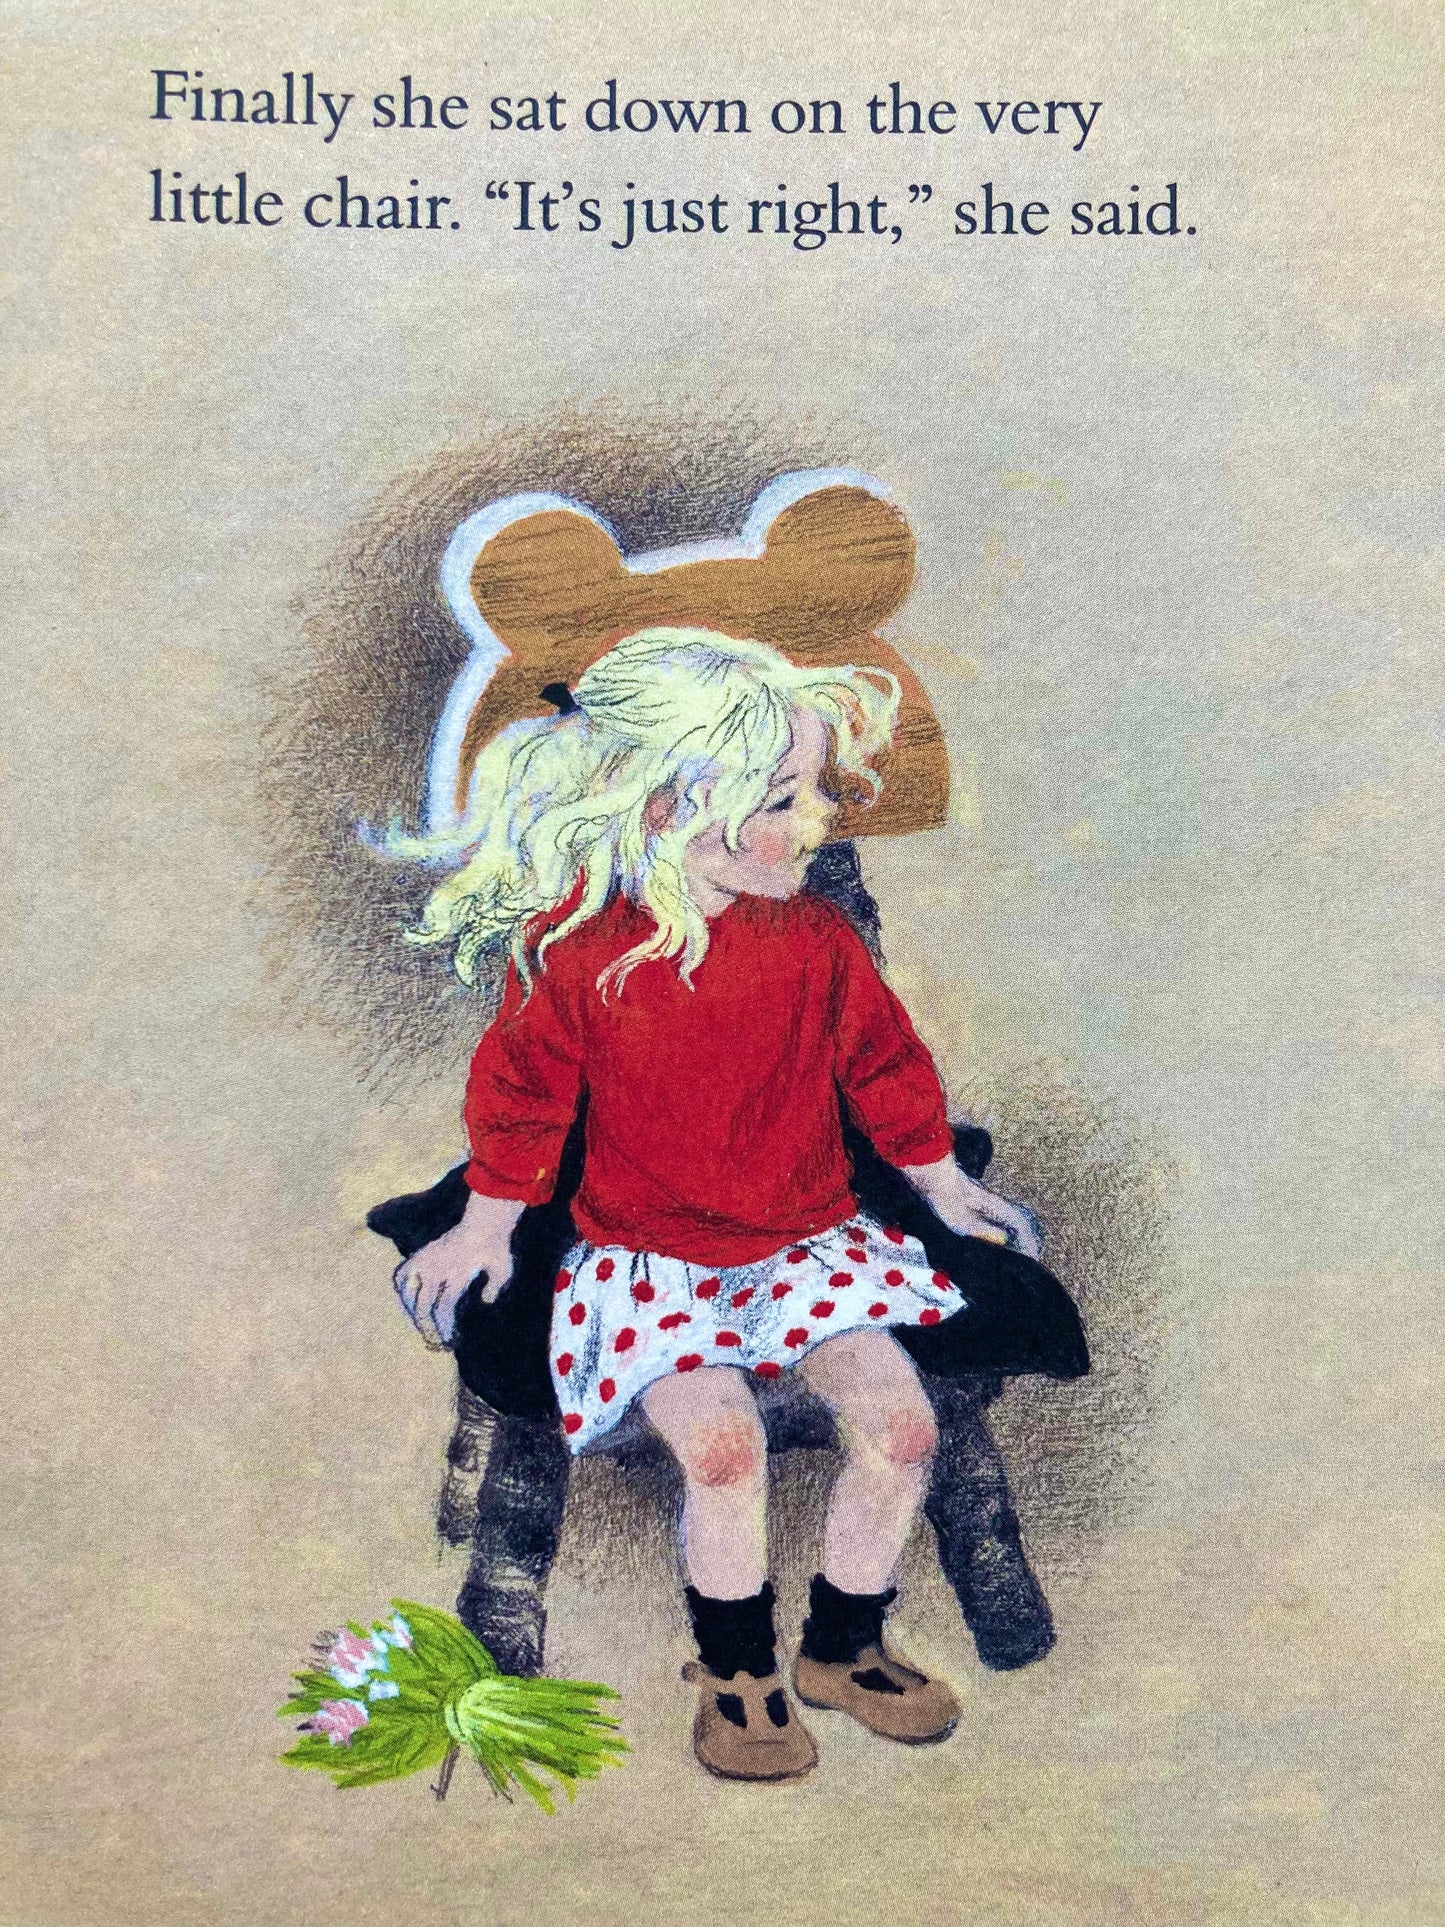 Children's Fairy Tale Book - GOLDILOCKS and the THREE BEARS